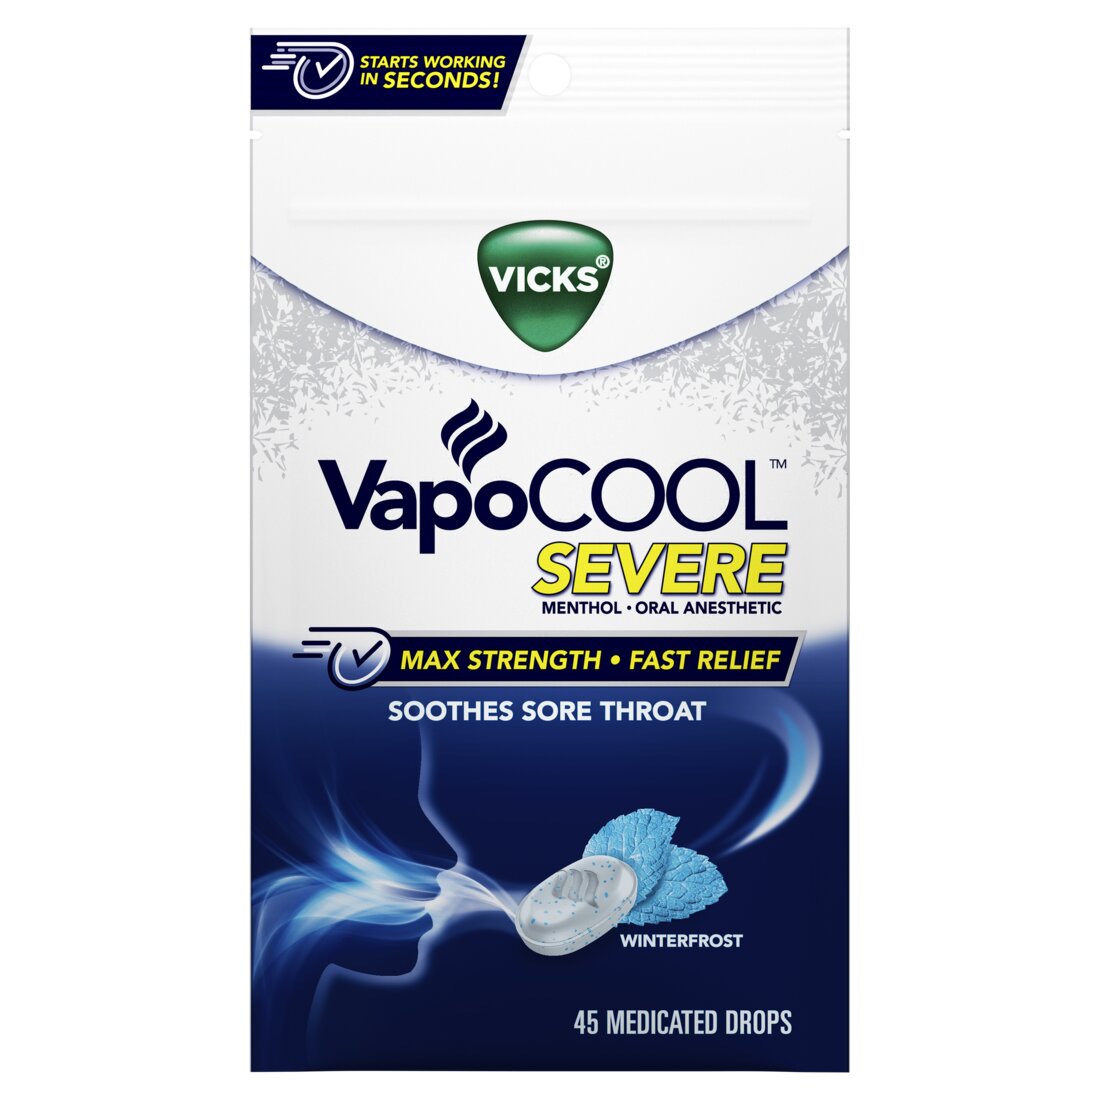 Vicks VapoCOOL SEVERE Medicated Sore Throat Drops Fast-Acting Max Strength Winterfrost - 45ct/9pk